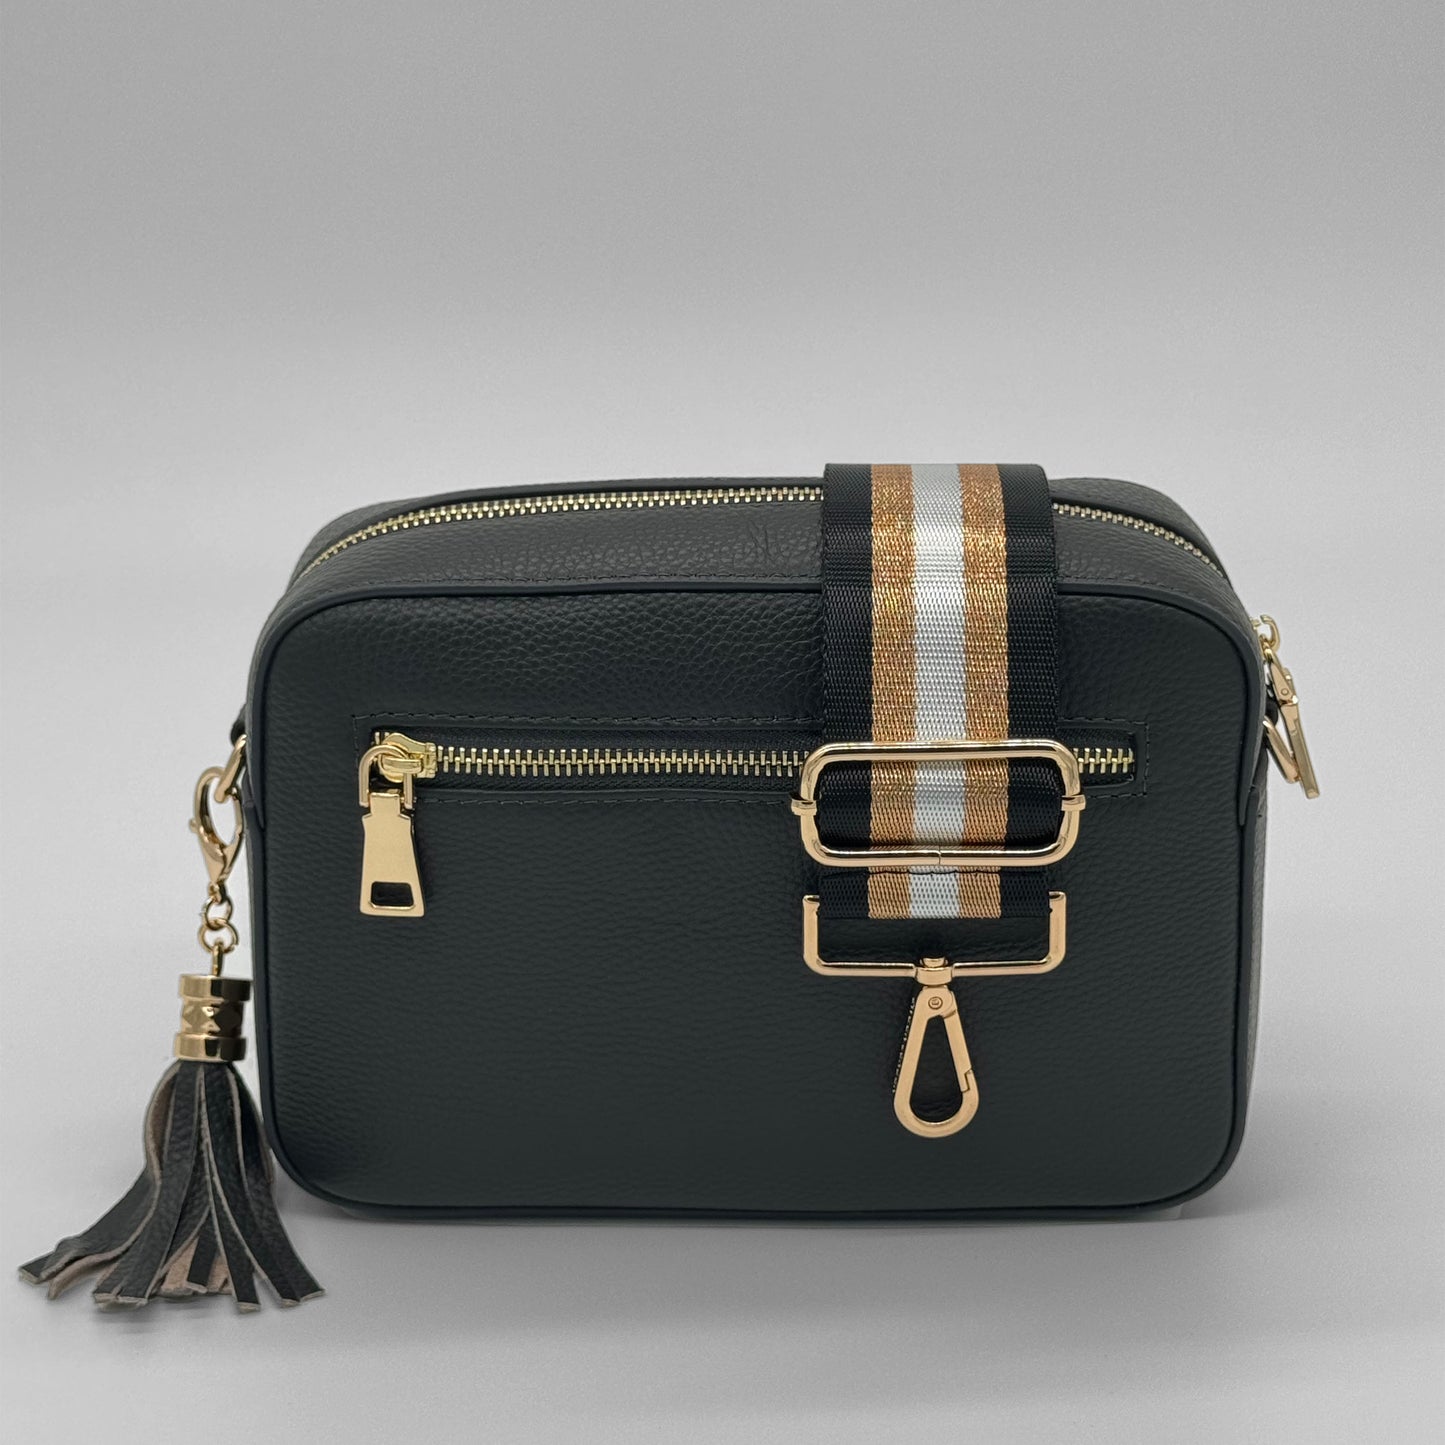 Bag with Black & Gold Metallic Stripe Bag Strap